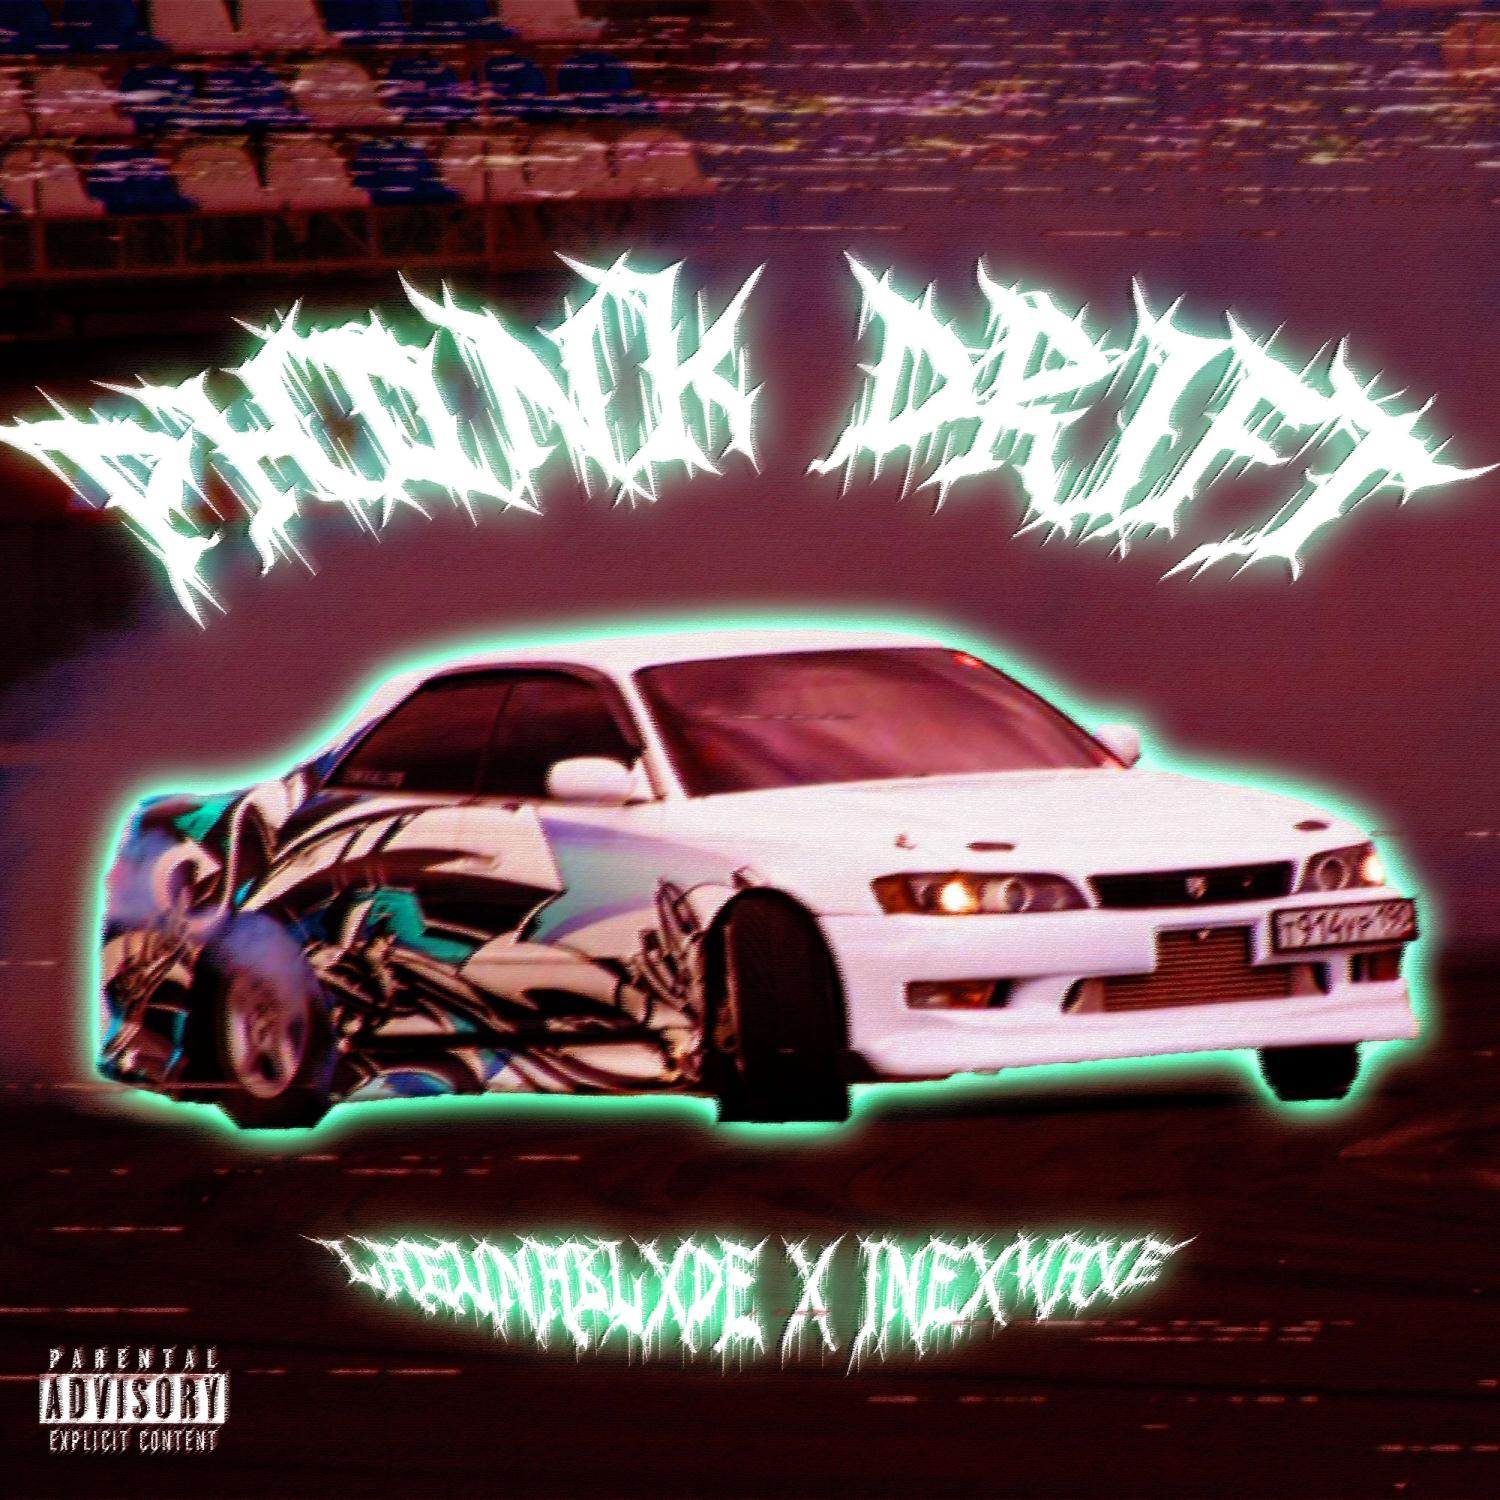 Постер альбома Phonk Drift